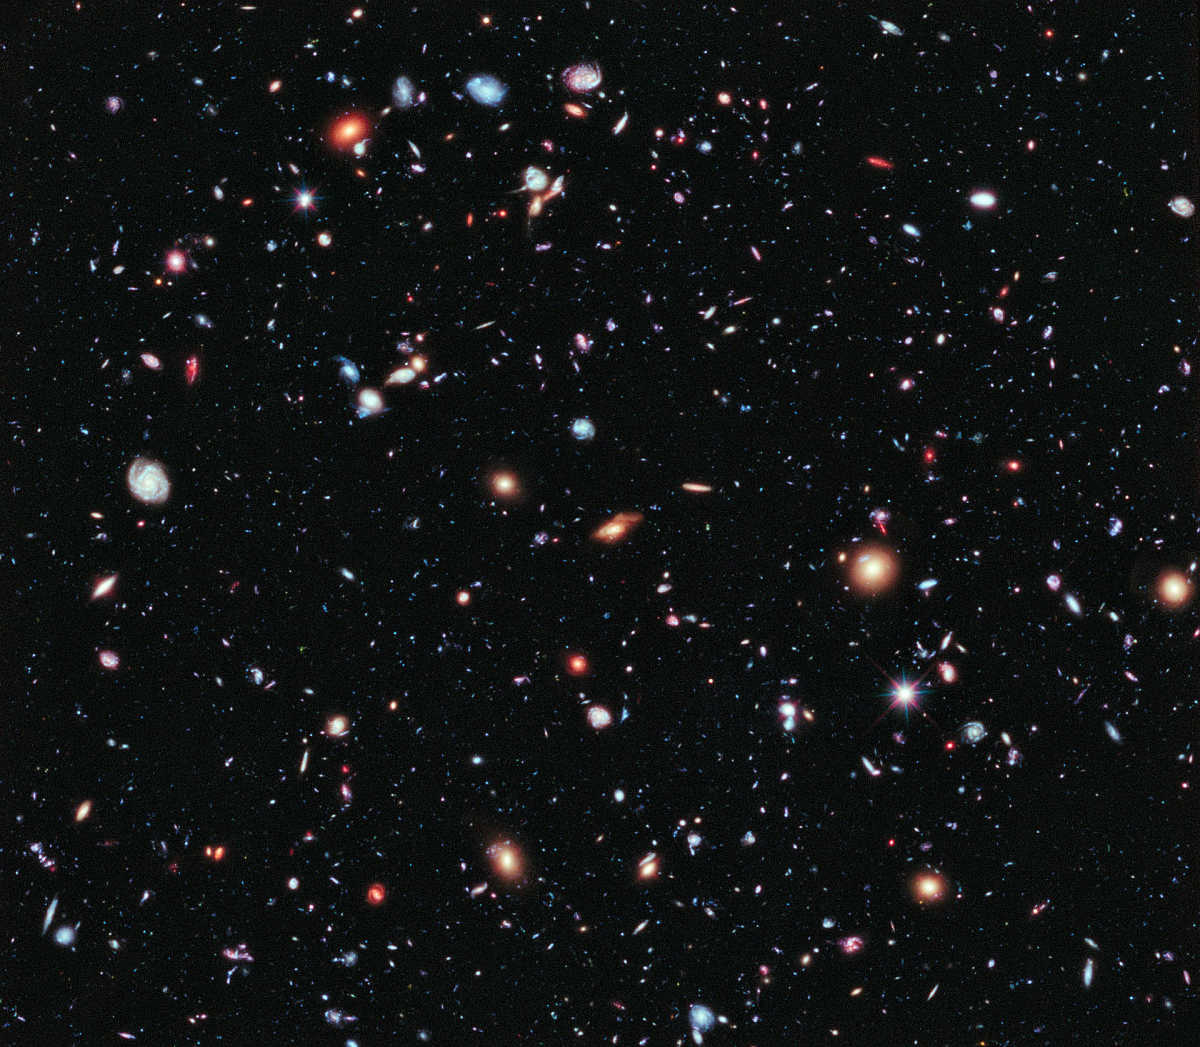 Hubble eXtreme Deep Field (HXDF)